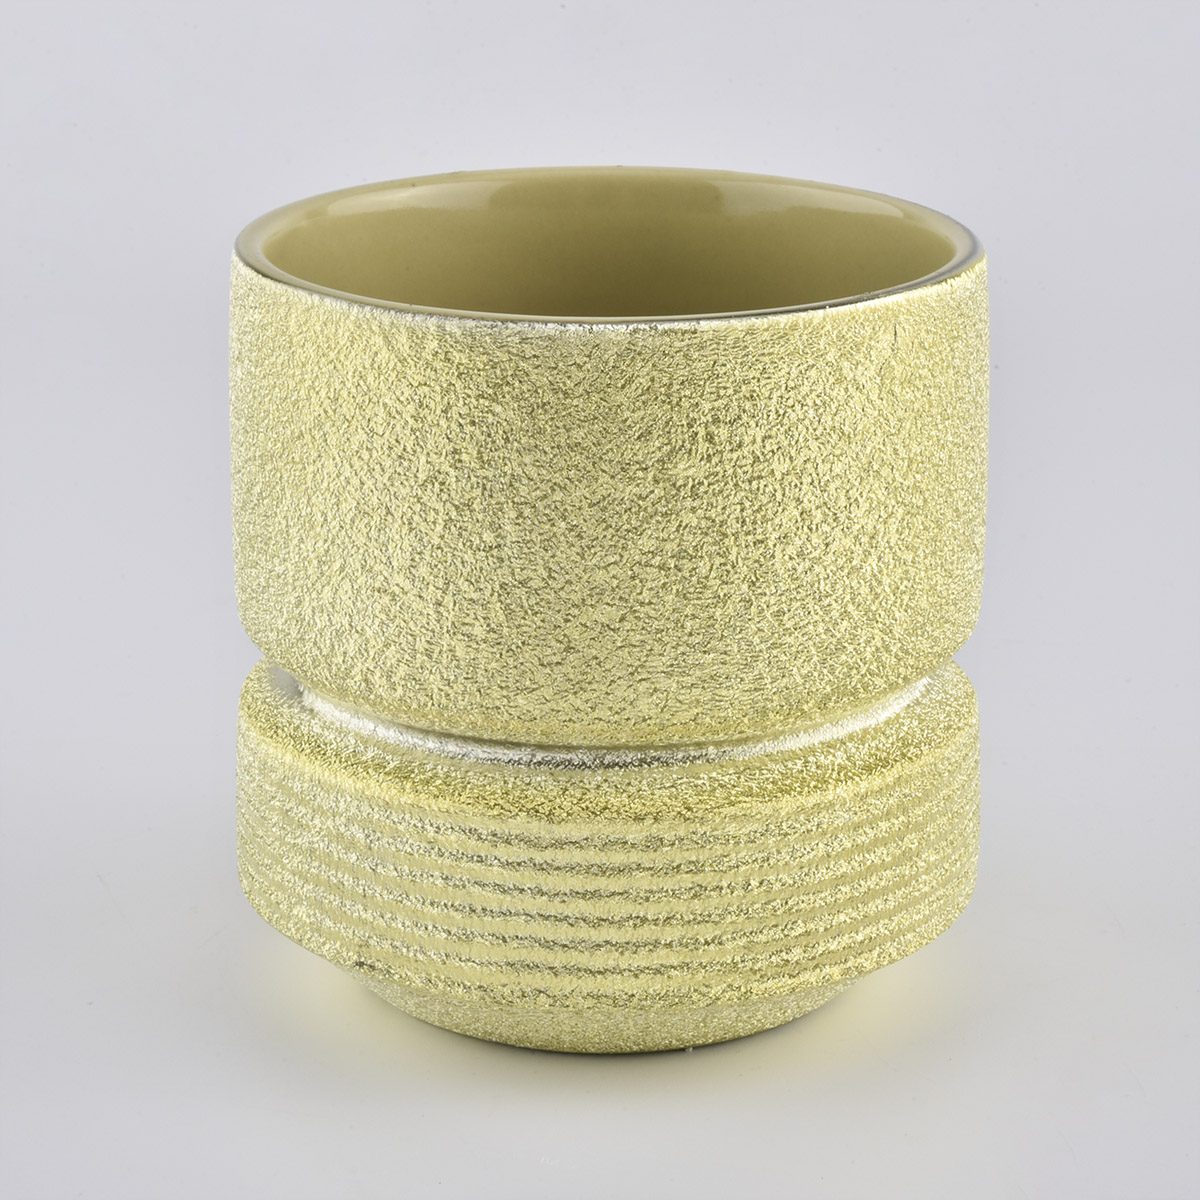 10oz gold ceramic candle jars wholesale